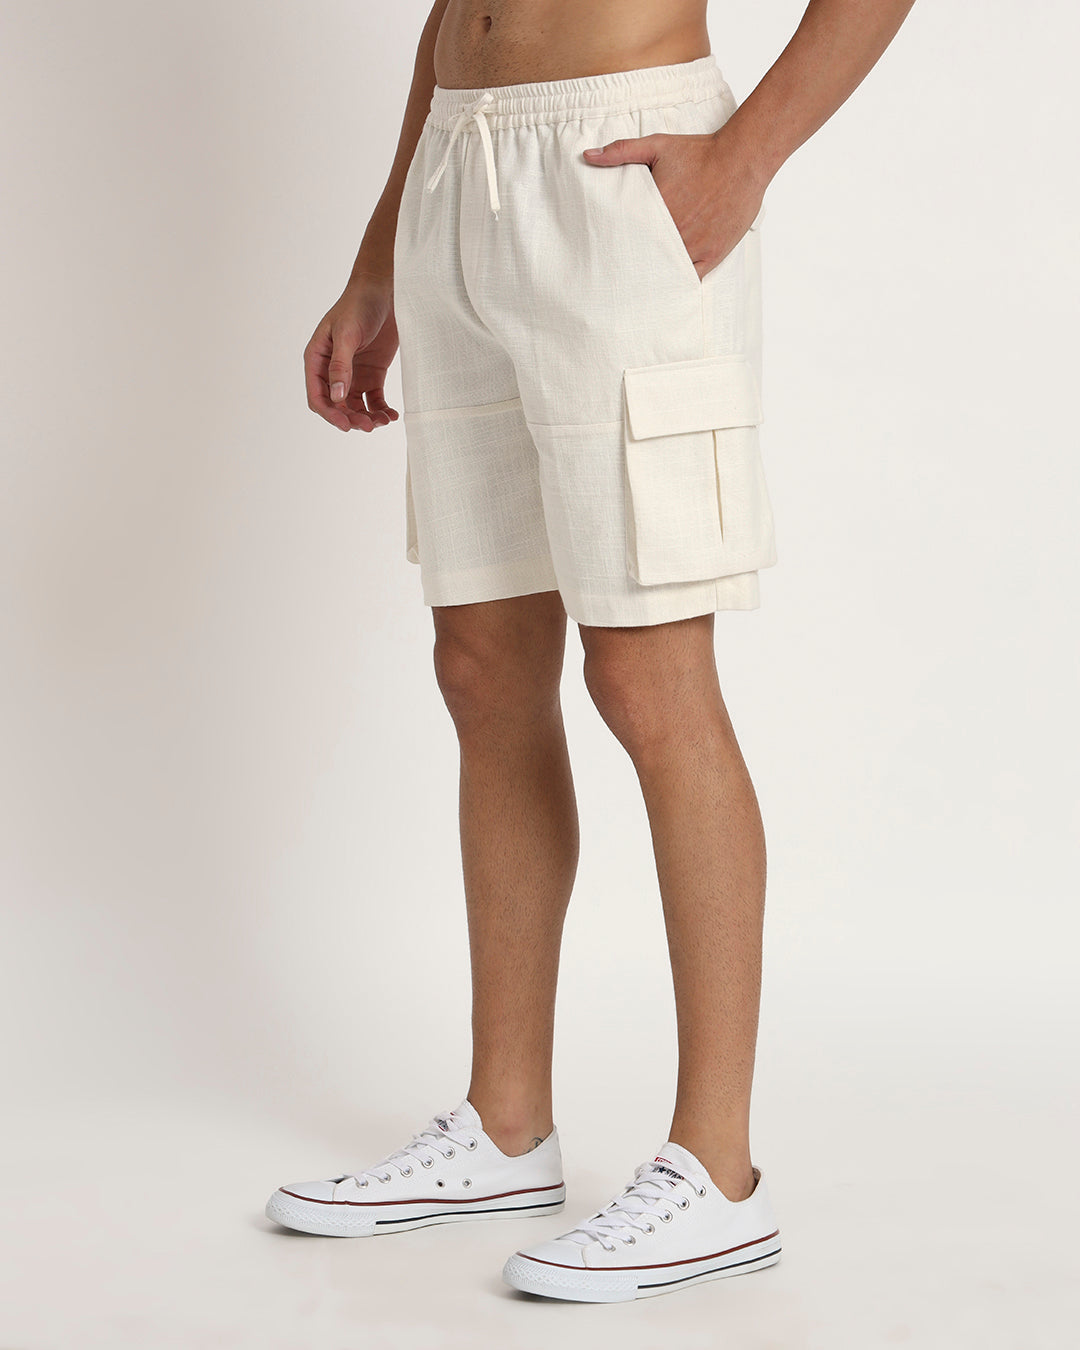 Combo: Classic Greening Spring Half Sleeves Men's Shirt & Cargo Shorts